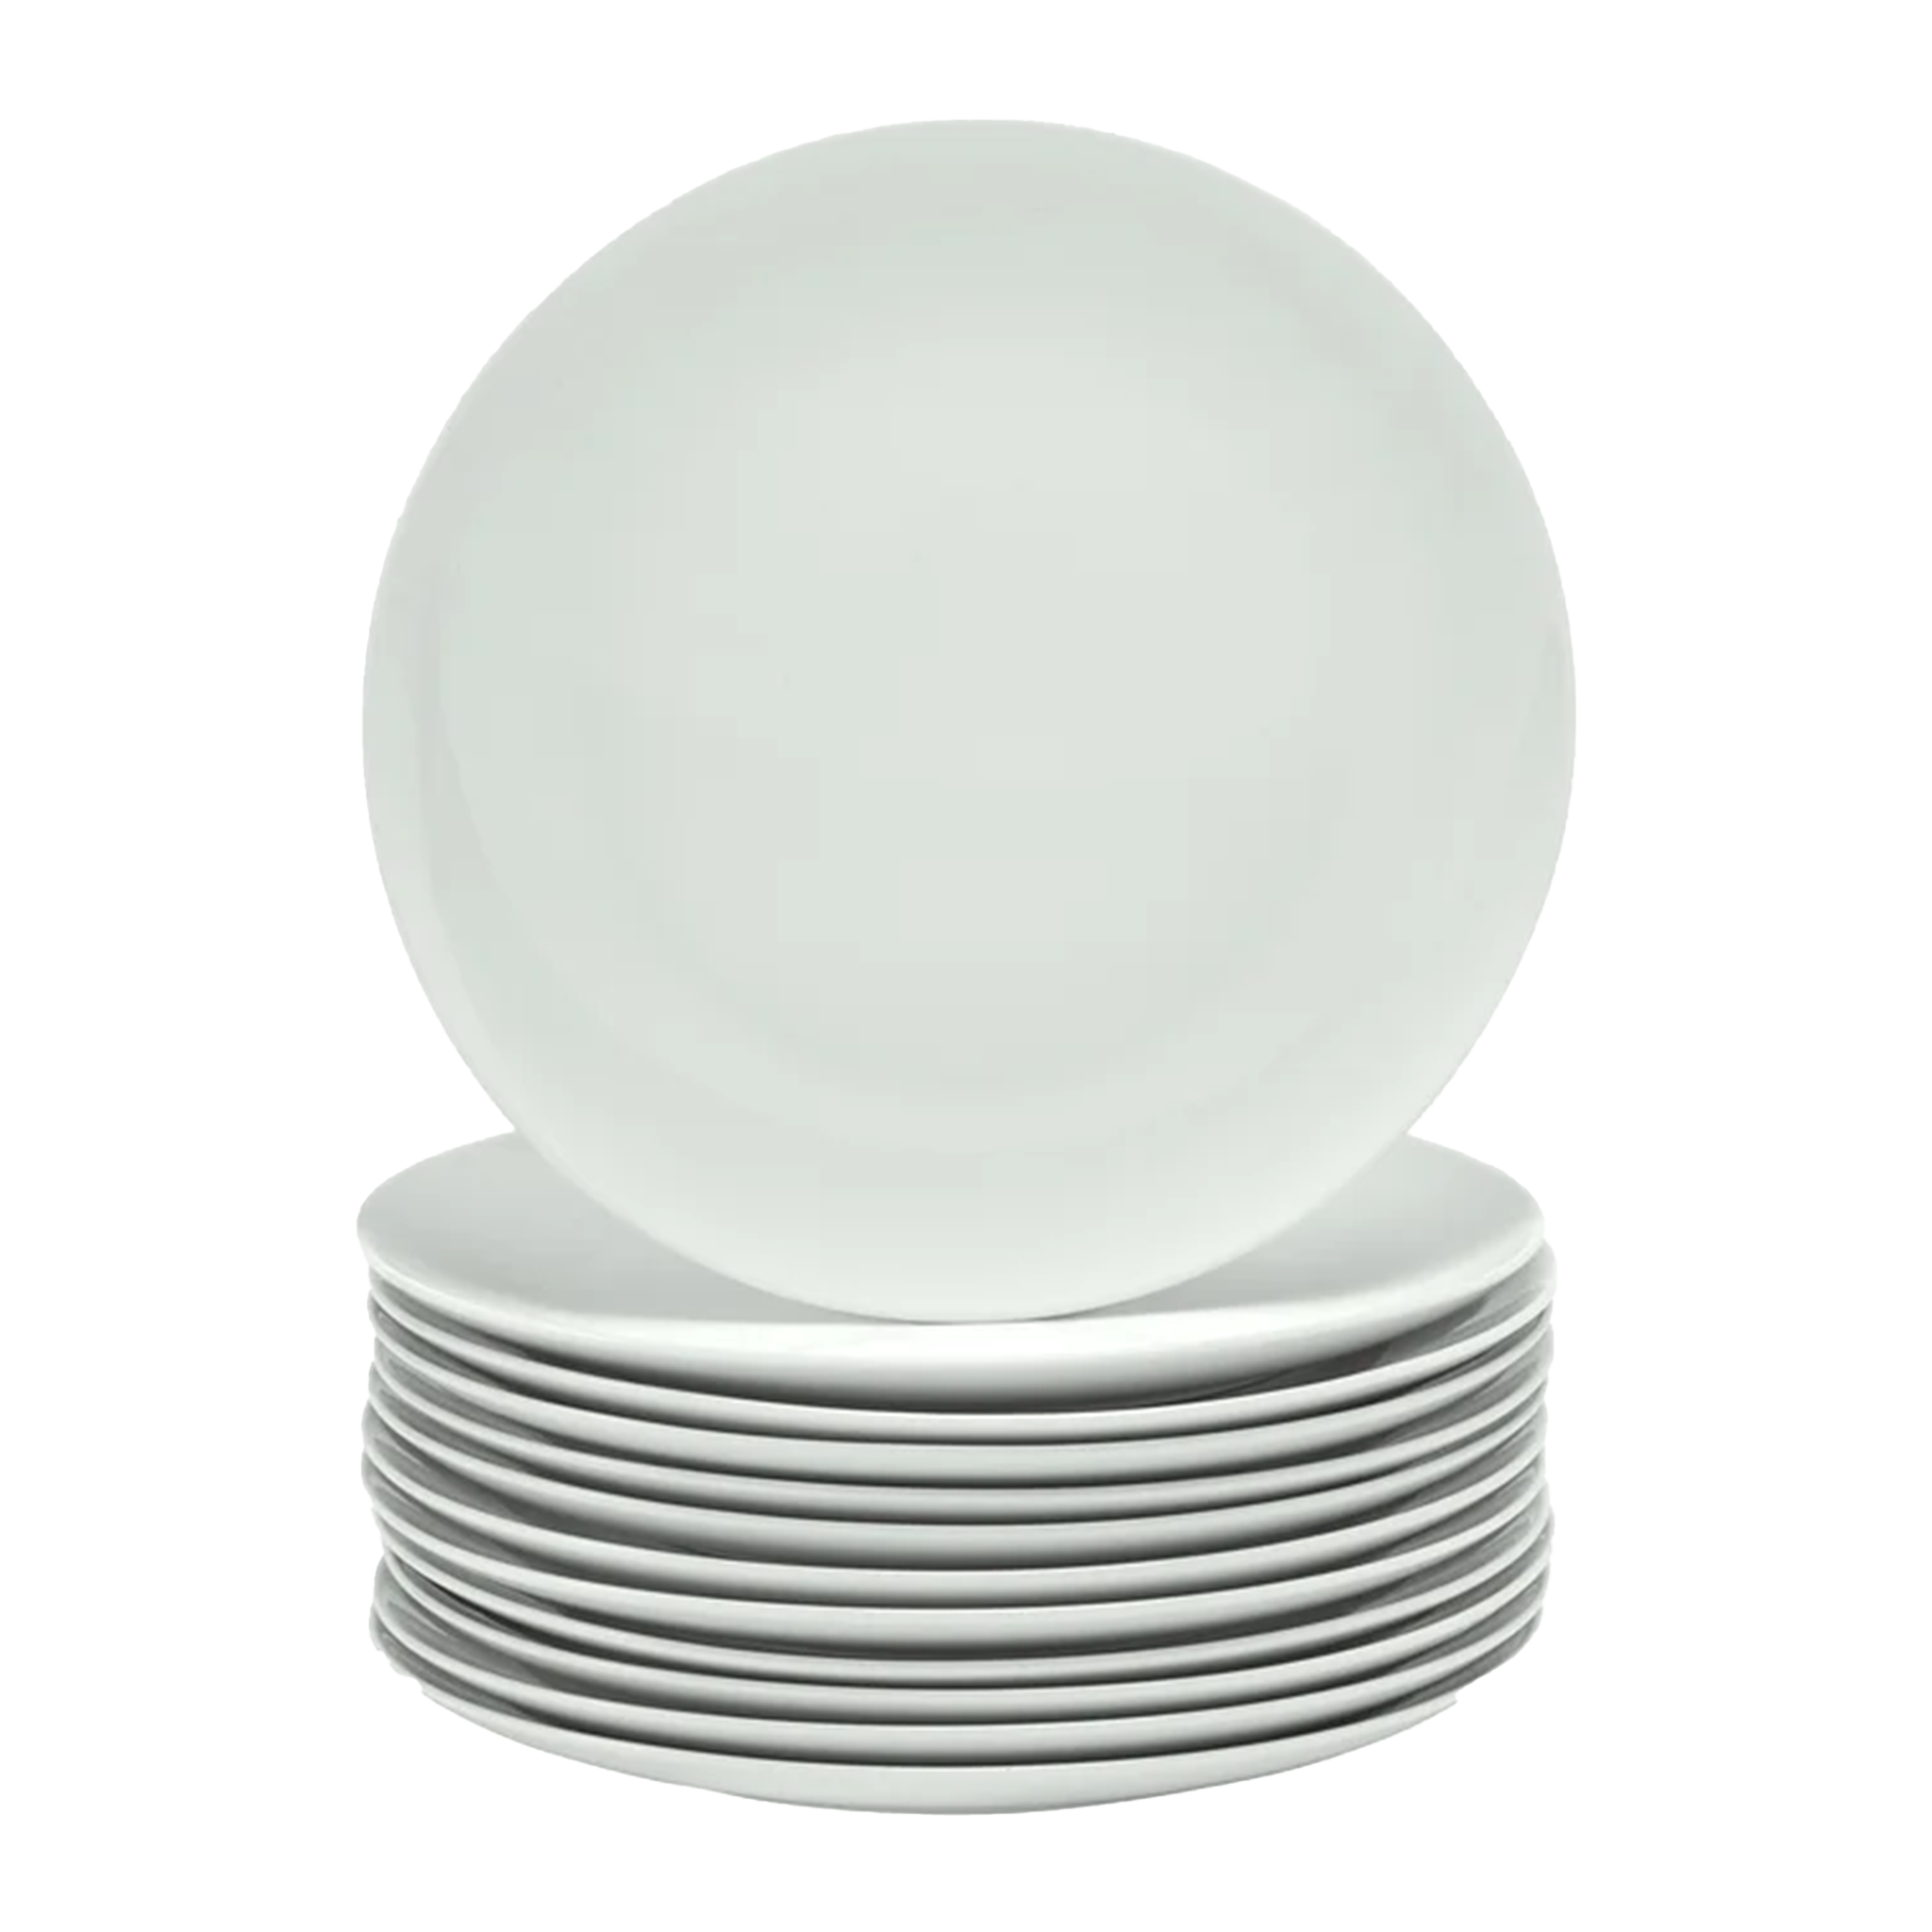 White Dinner Plates - 12 Pieces